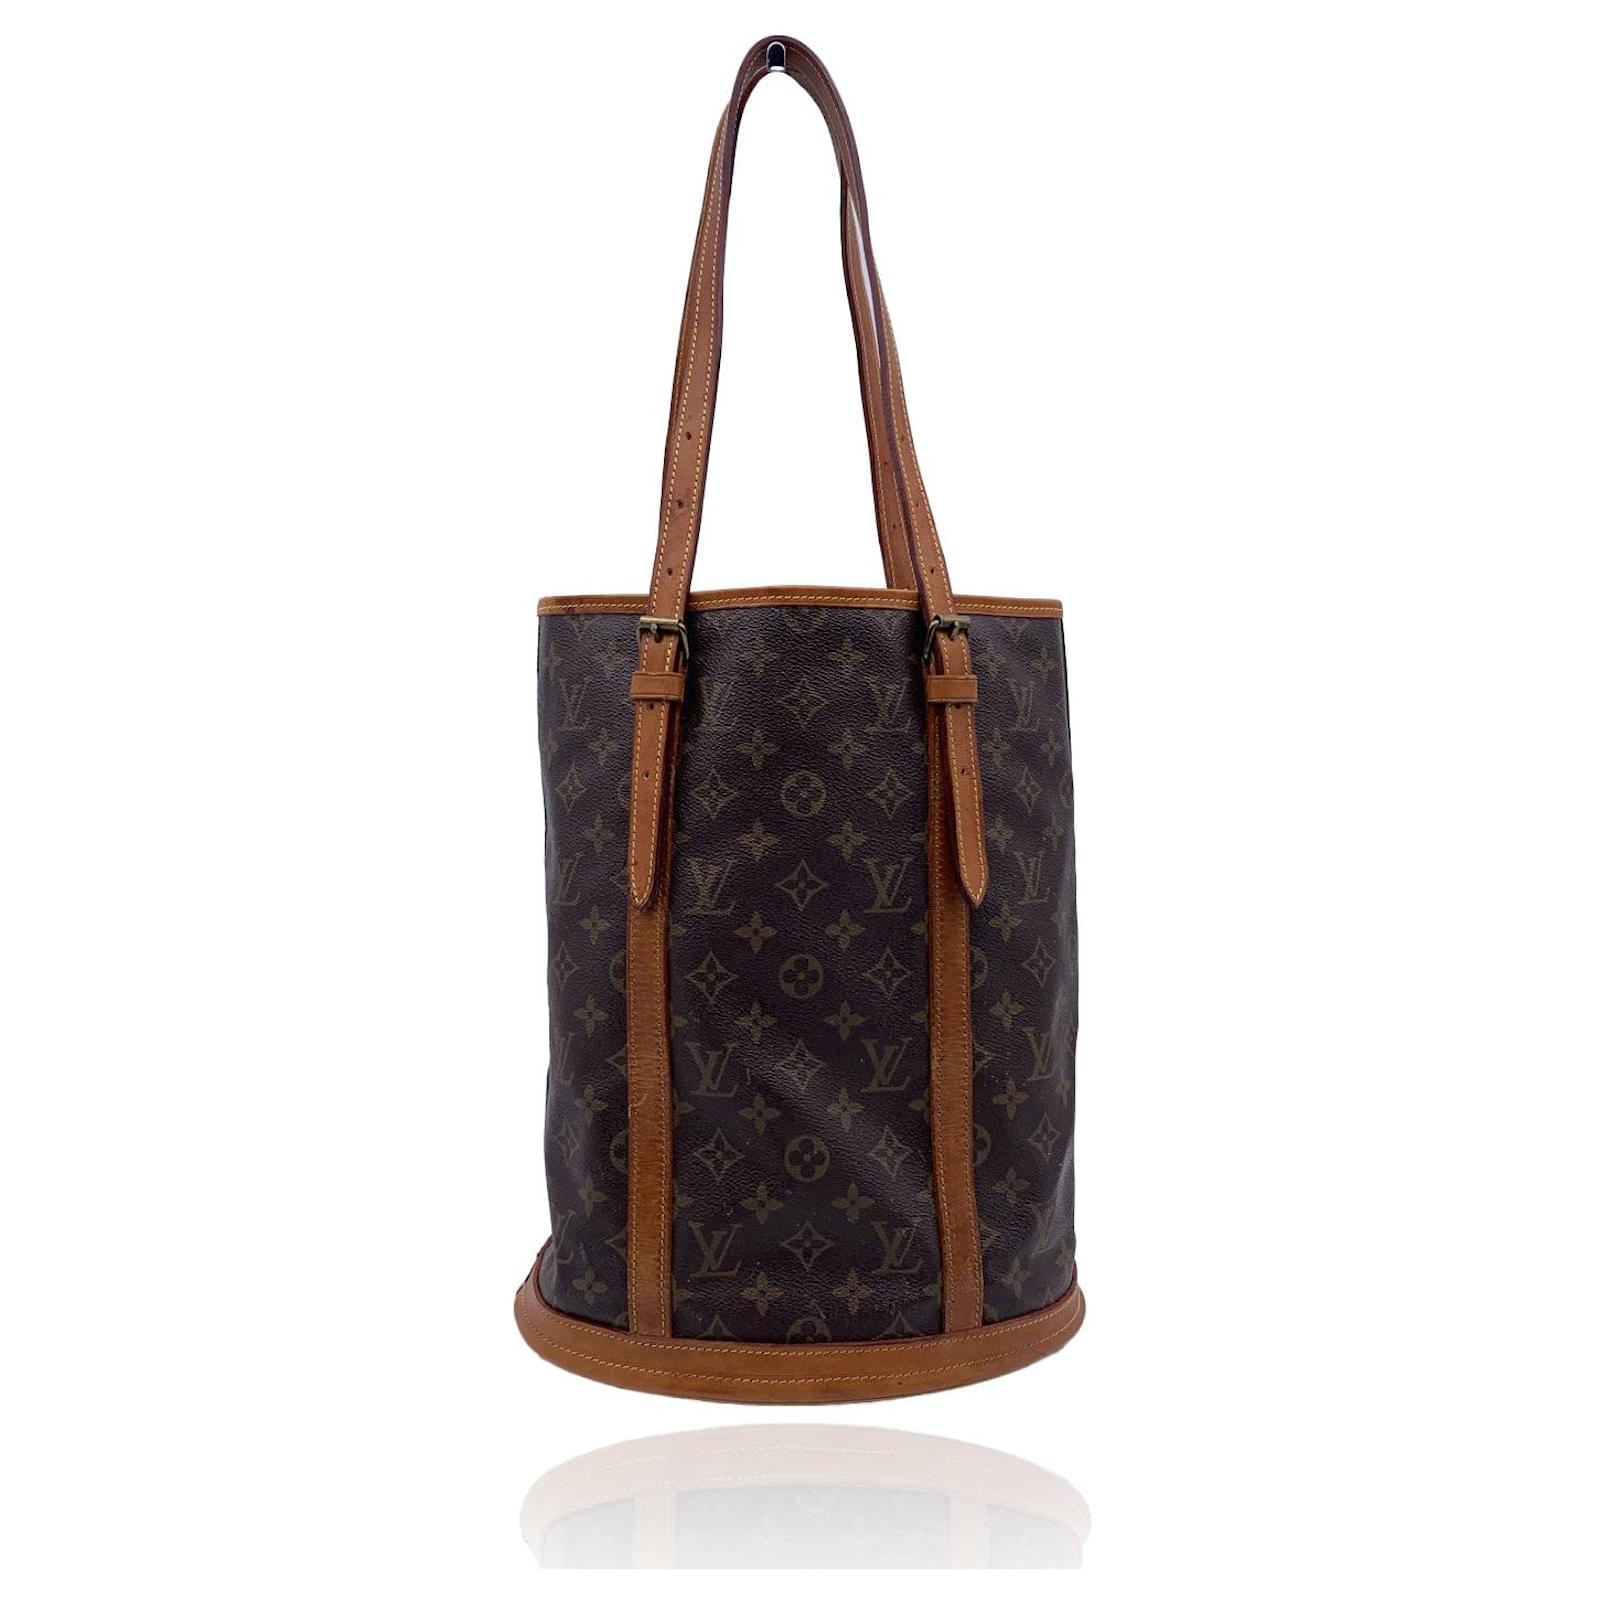 Authentic Louis Vuitton Big Shopping Bag